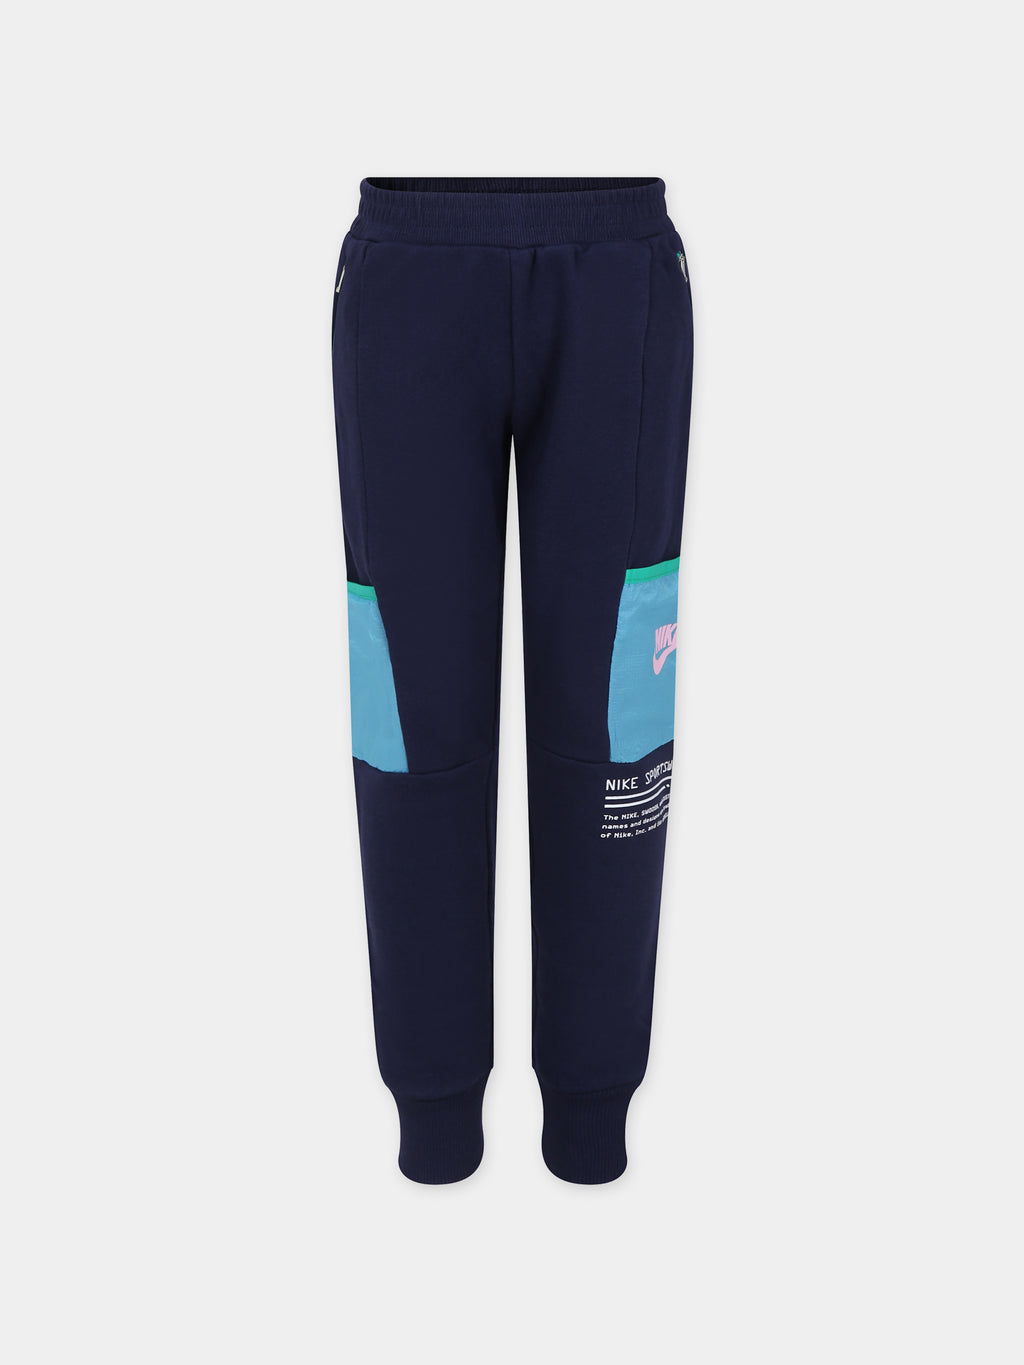 Pantaloni blu per bambino con logo e swoosh